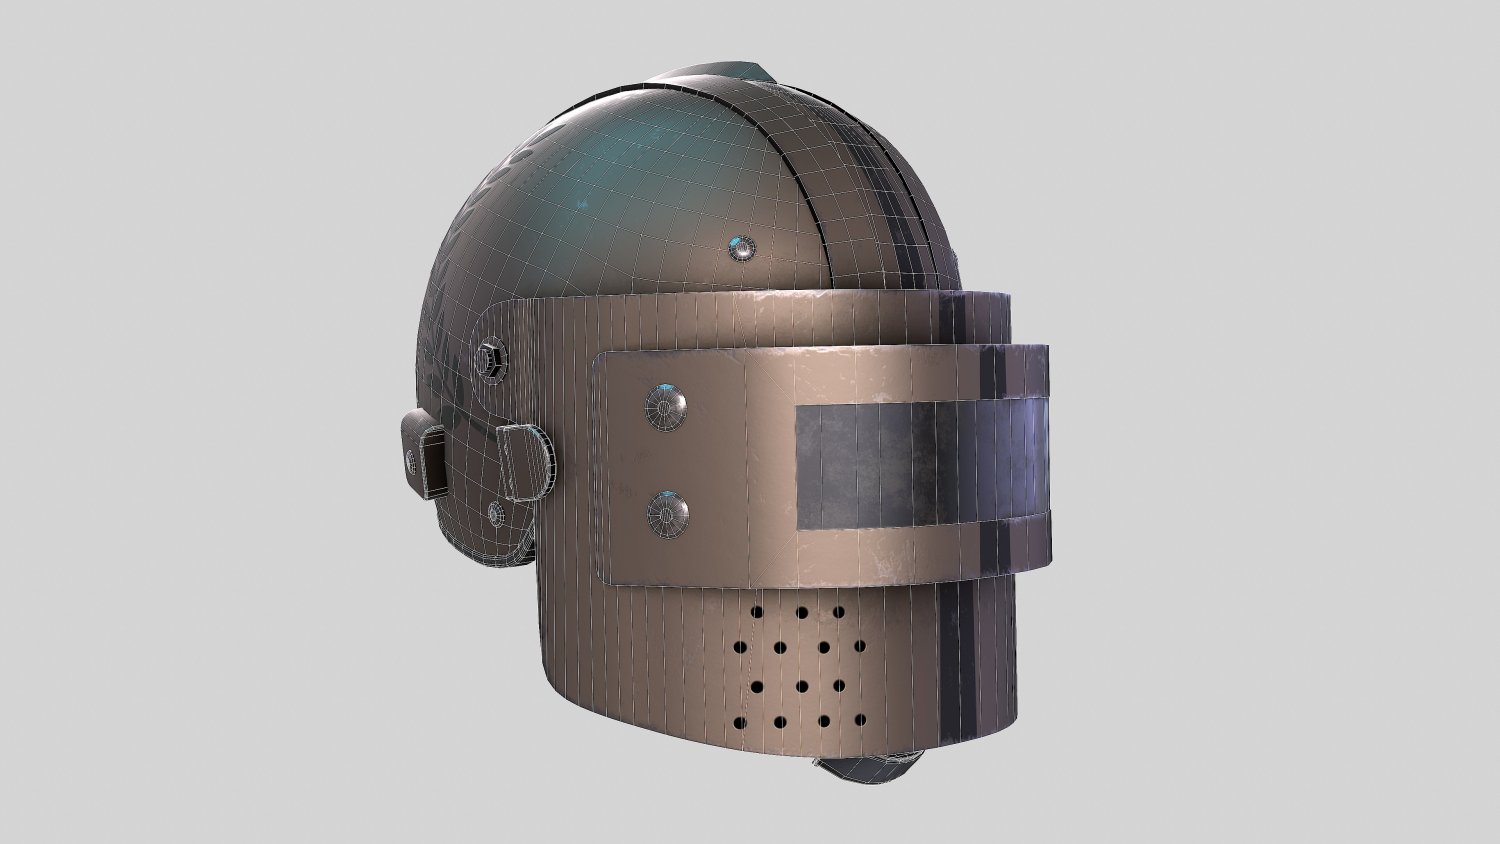 Russian spetsnaz helmet (PUBG level 3 helmet). | Art Print